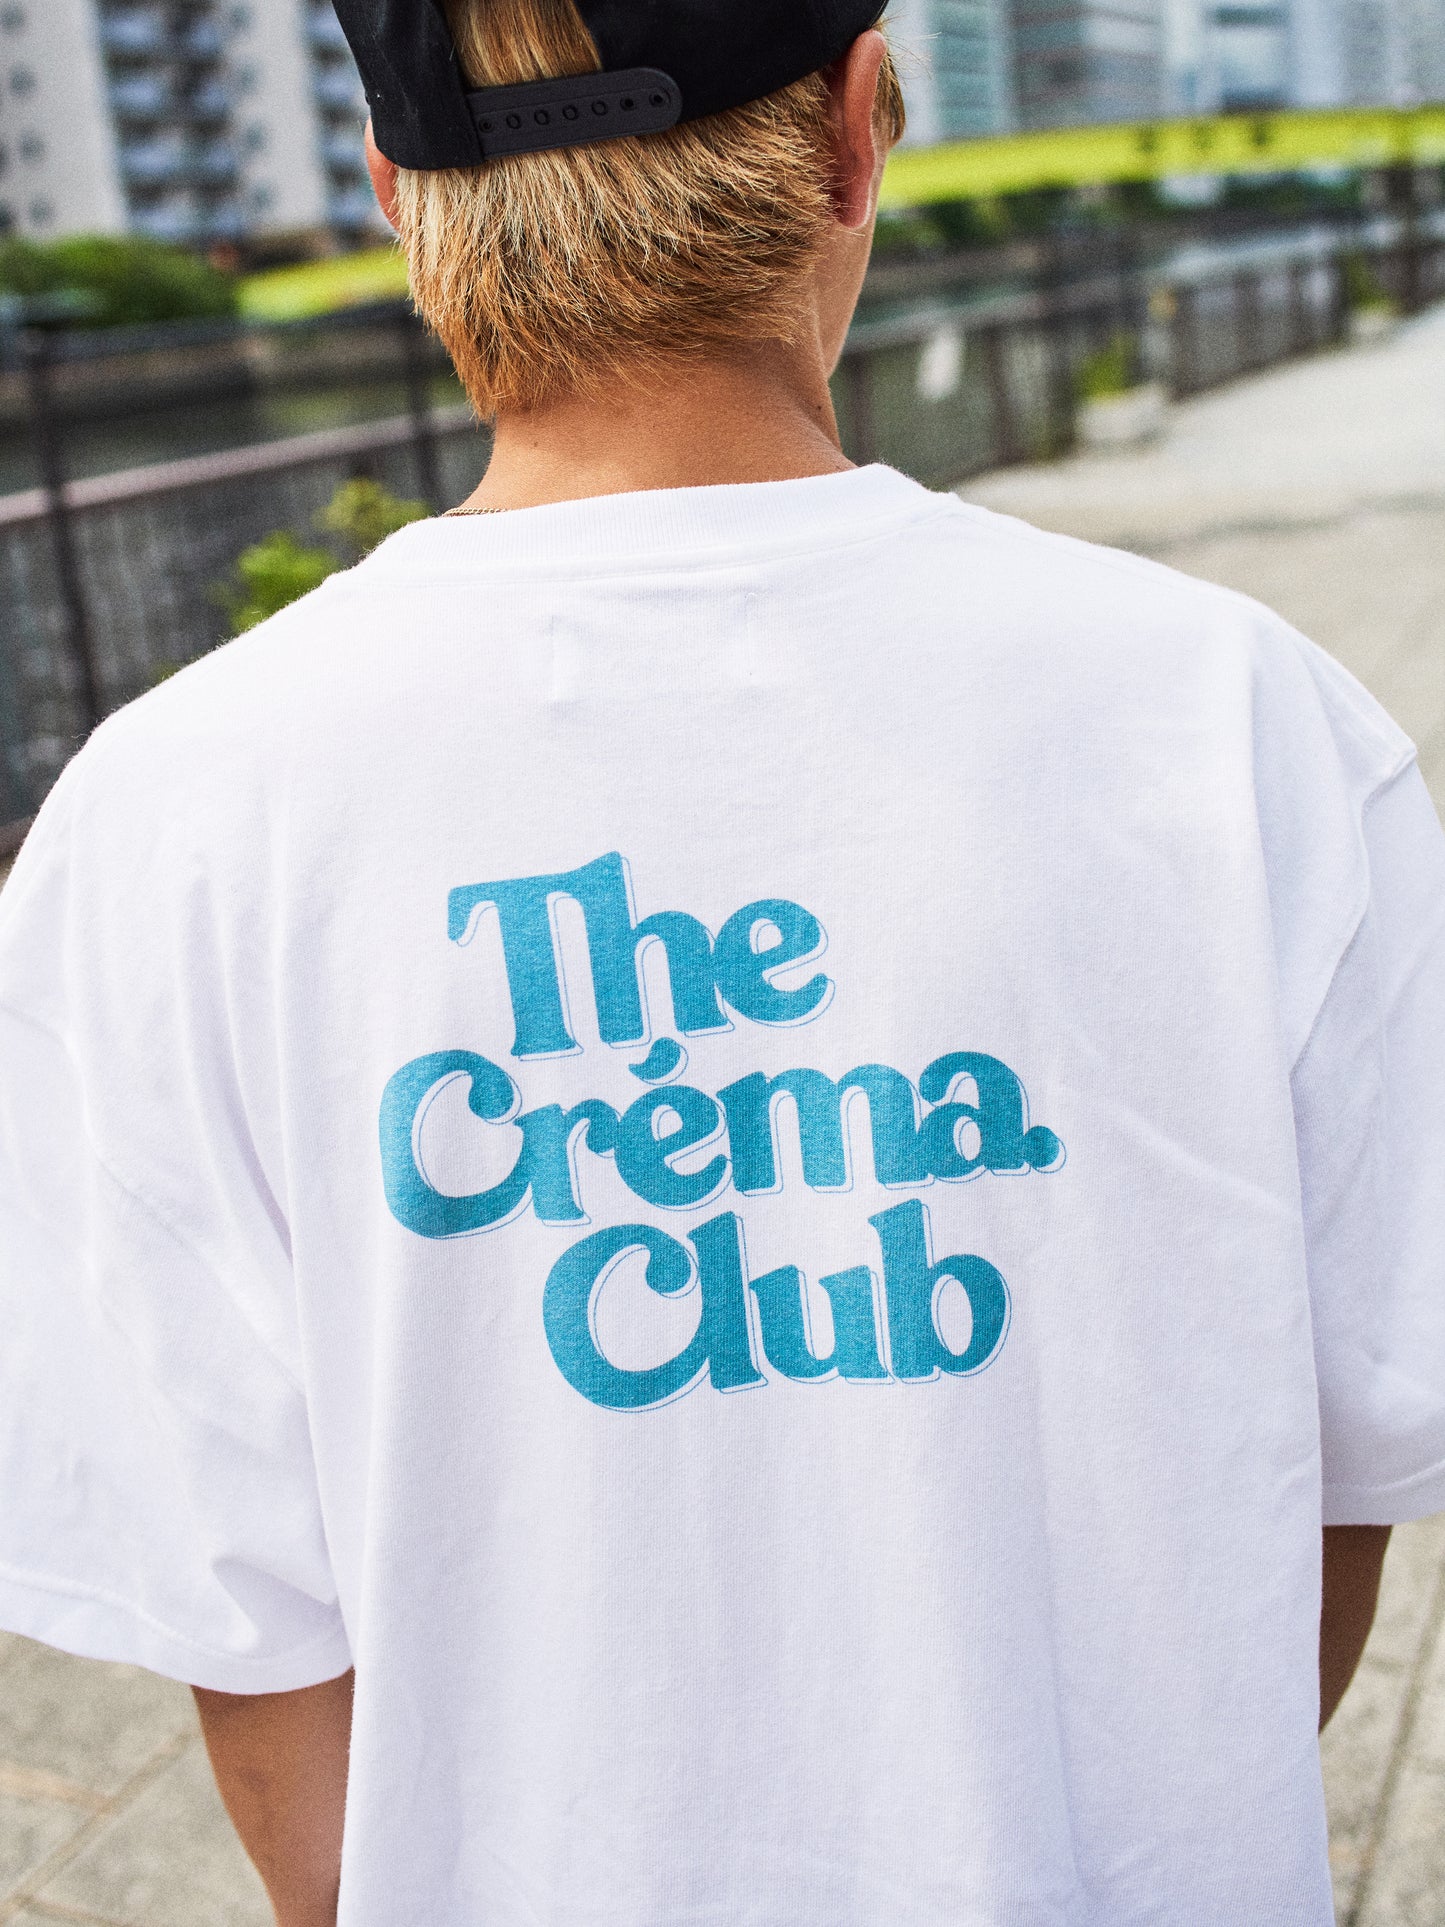 The Créma. Club BACK LOGO WHITE-T